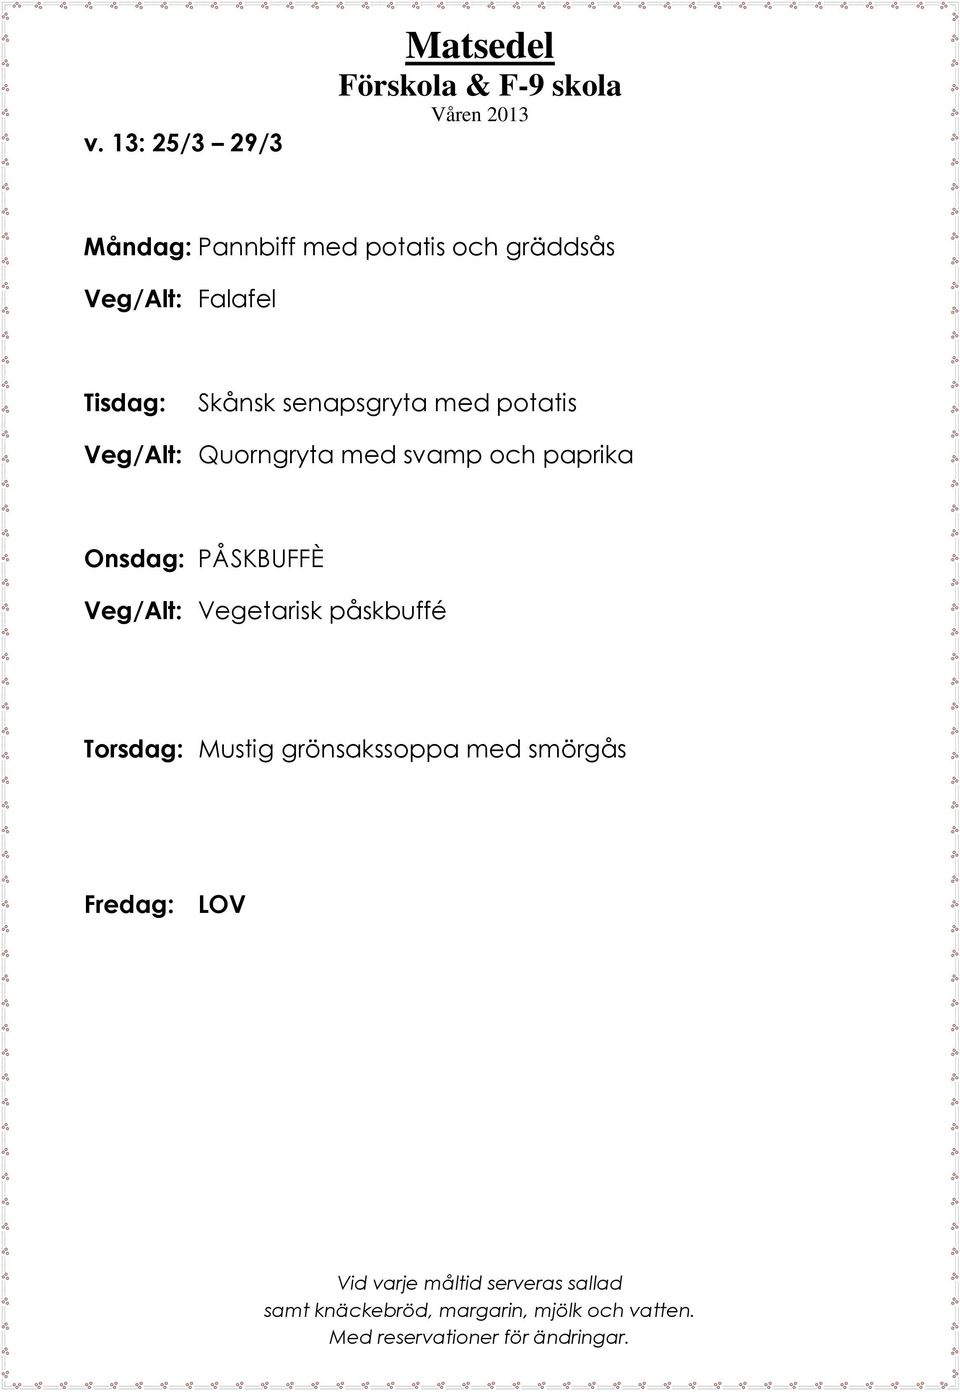 Quorngryta med svamp och paprika Onsdag: PÅSKBUFFÈ Veg/Alt: